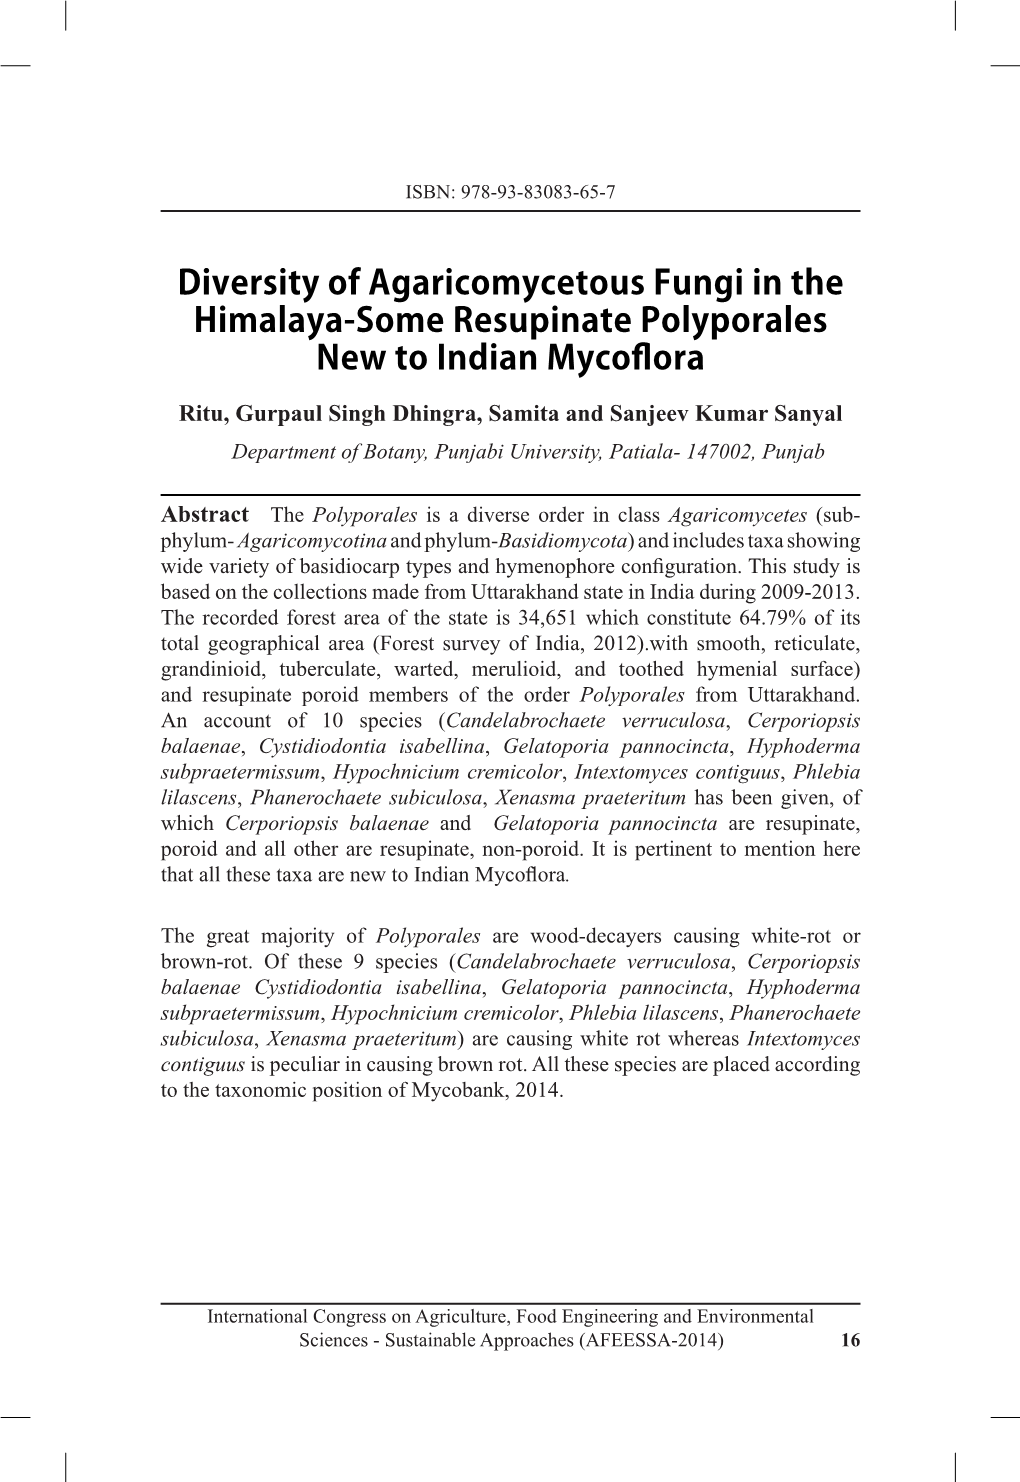 Diversity of Agaricomycetous Fungi in the Himalaya-Some Resupinate